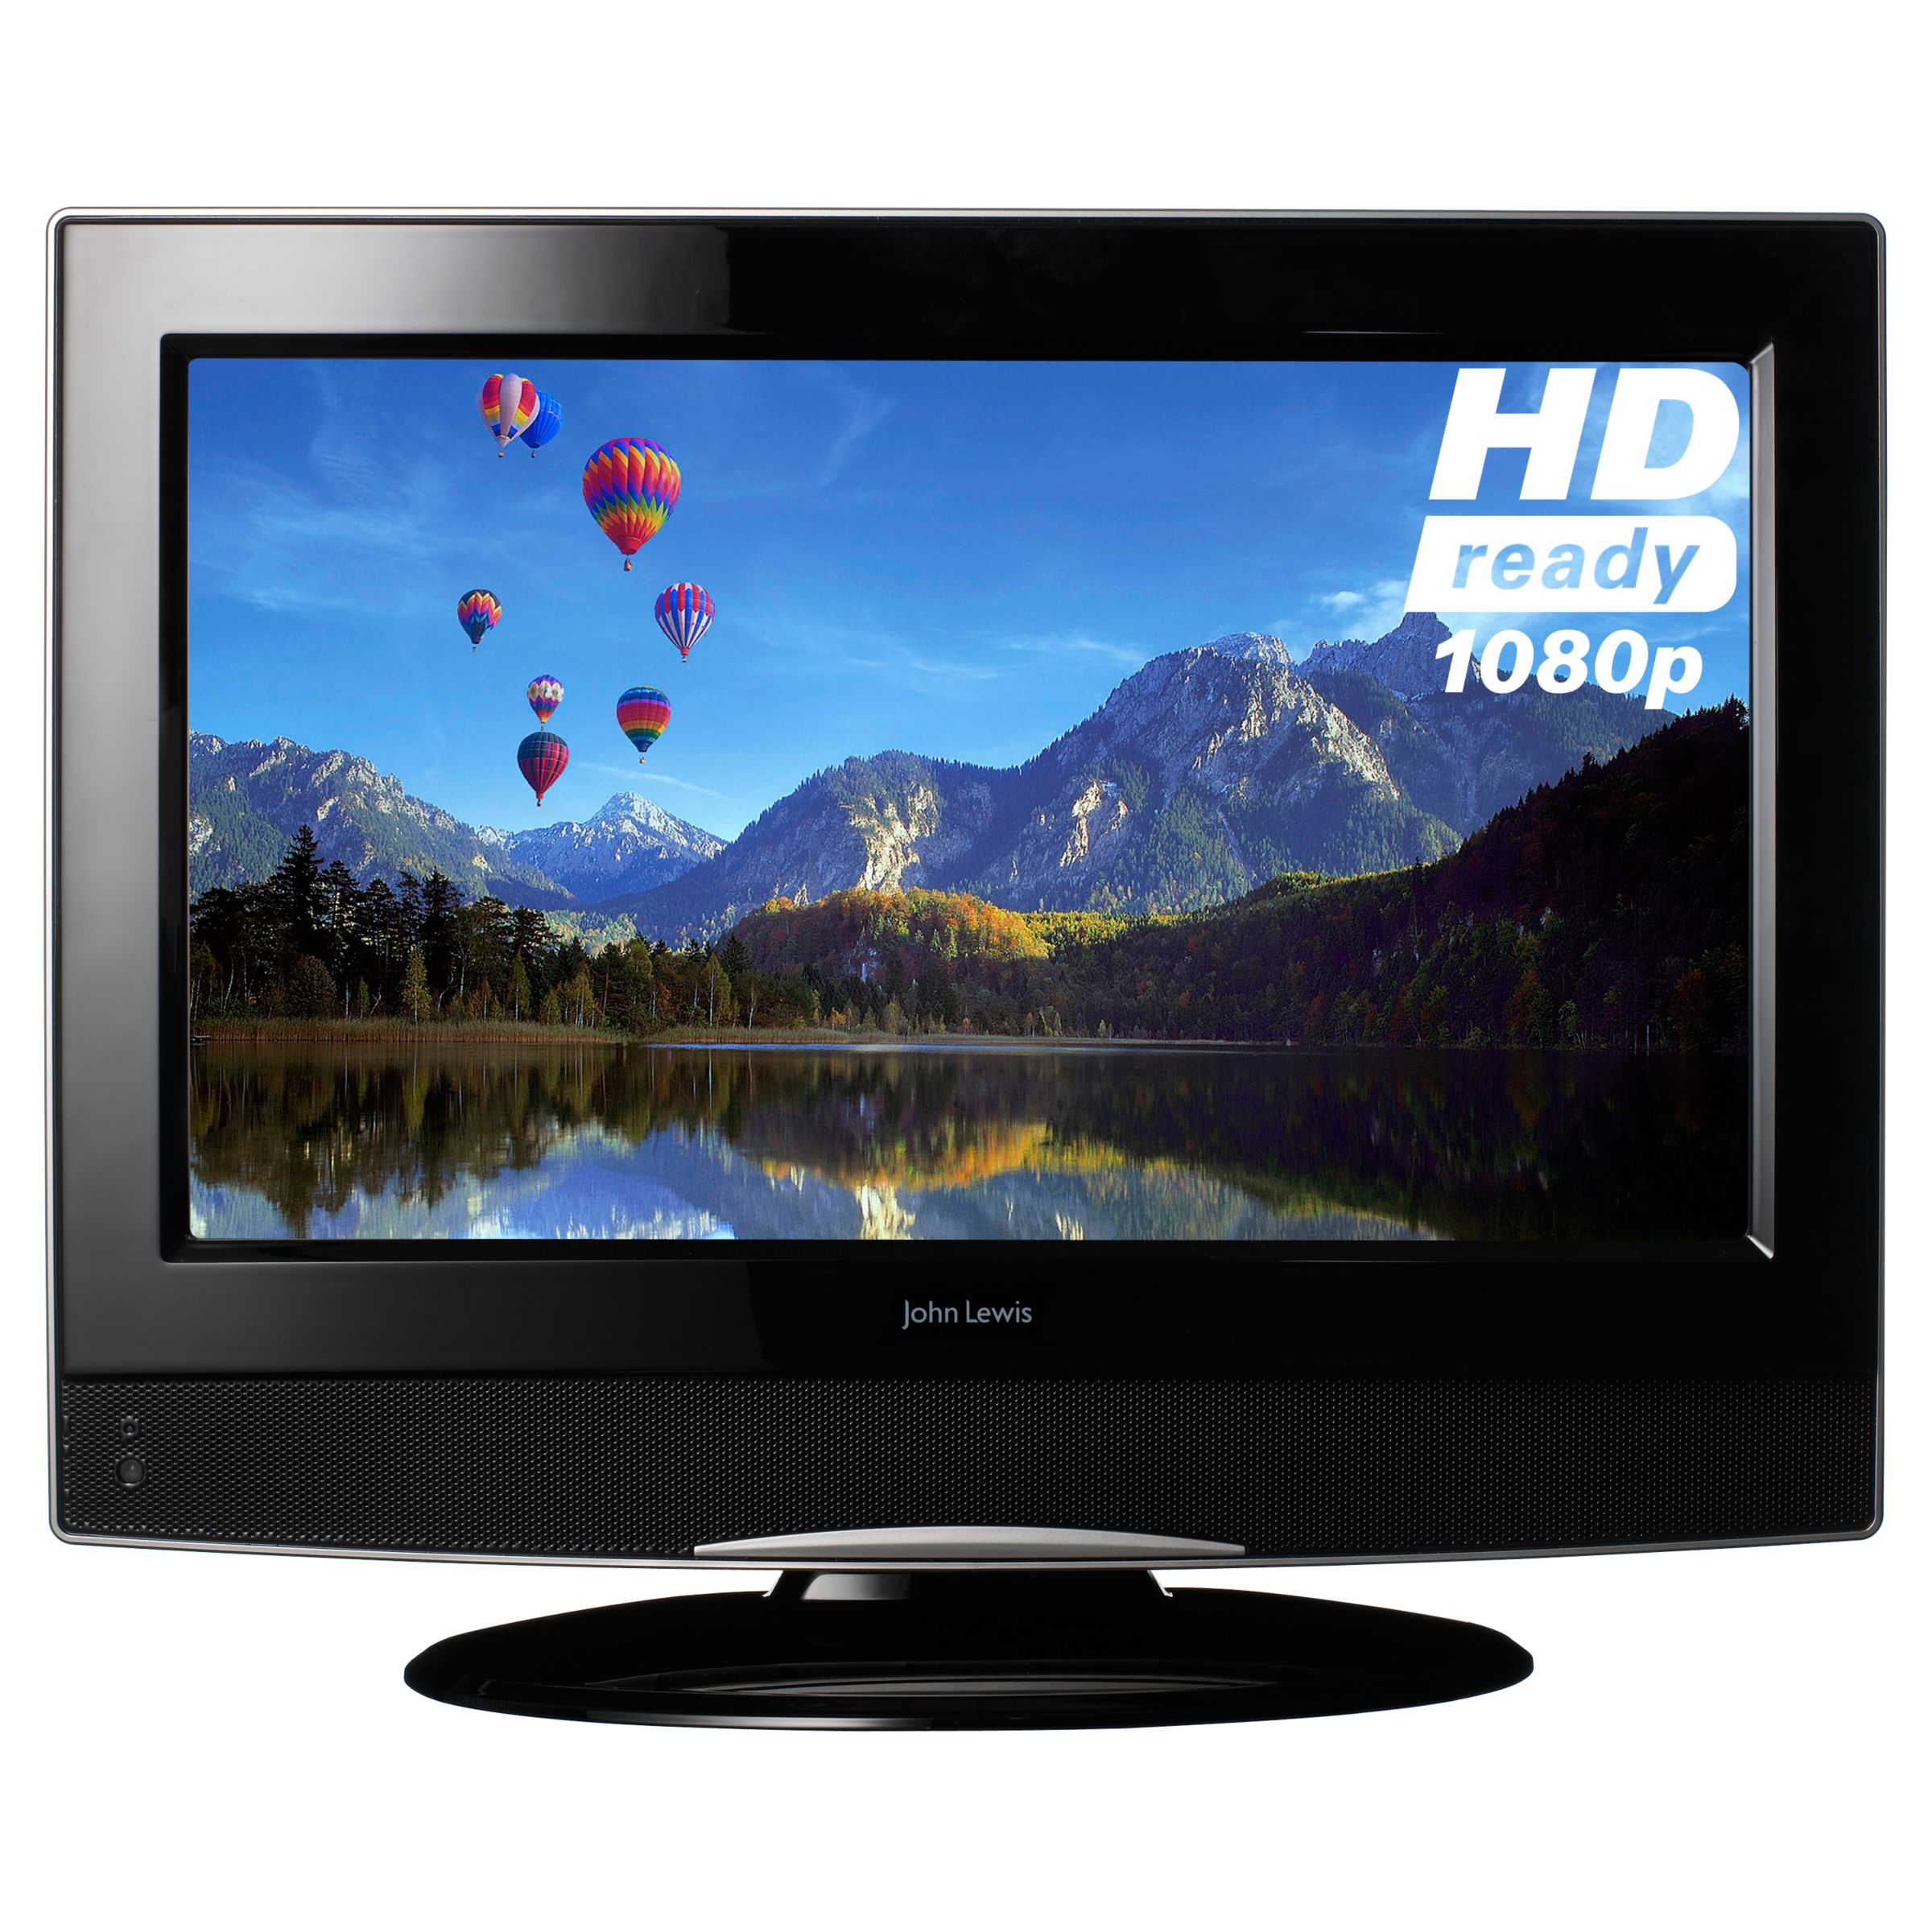 John Lewis JL22 LCD HD 1080p Digital Television, 22 Inch, Black at John Lewis